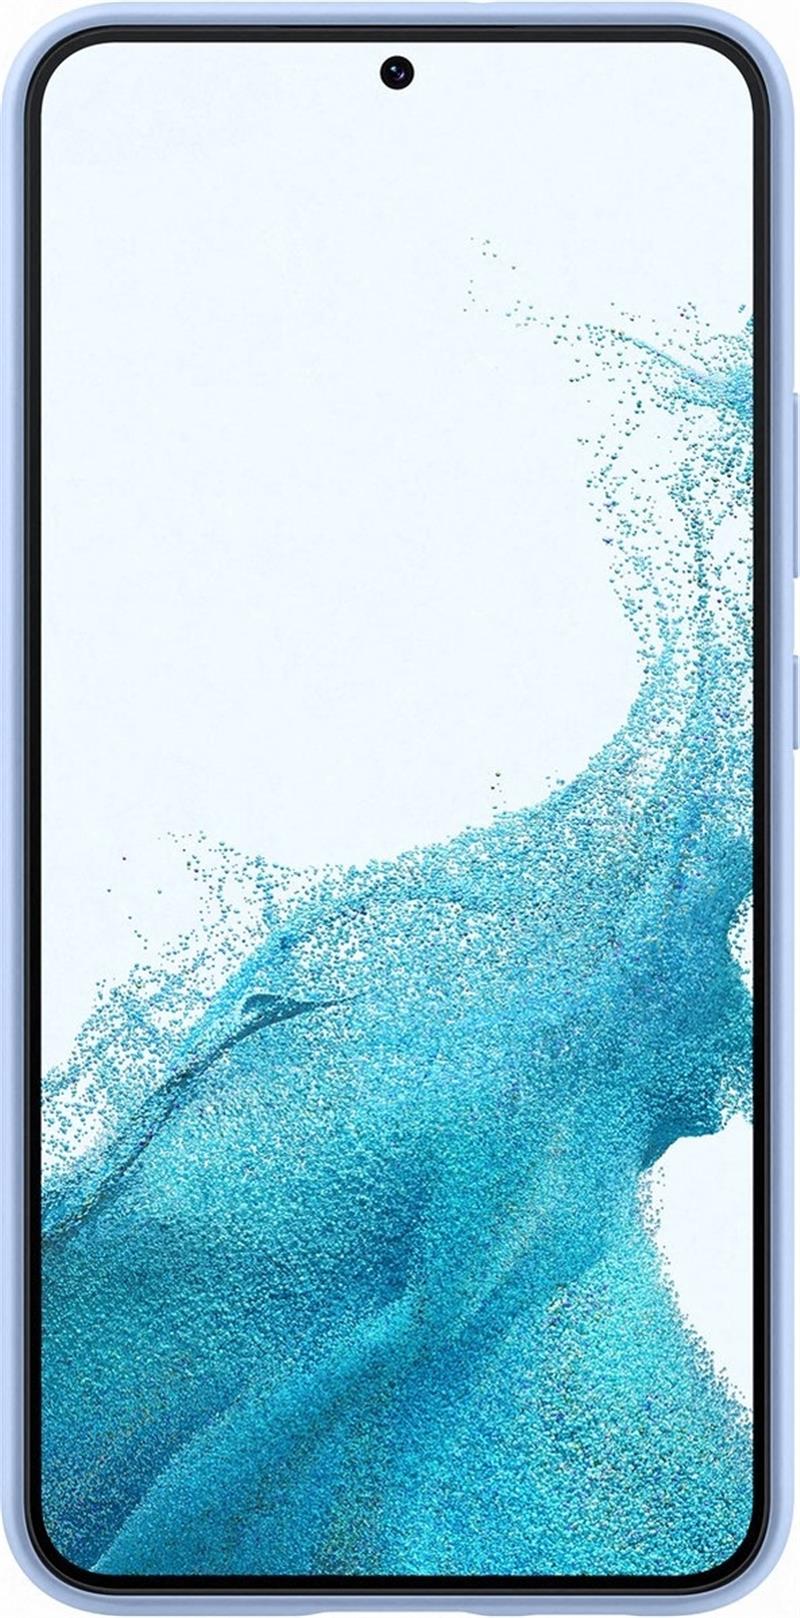  Samsung Silicone Cover Galaxy S22 5G Sky Blue